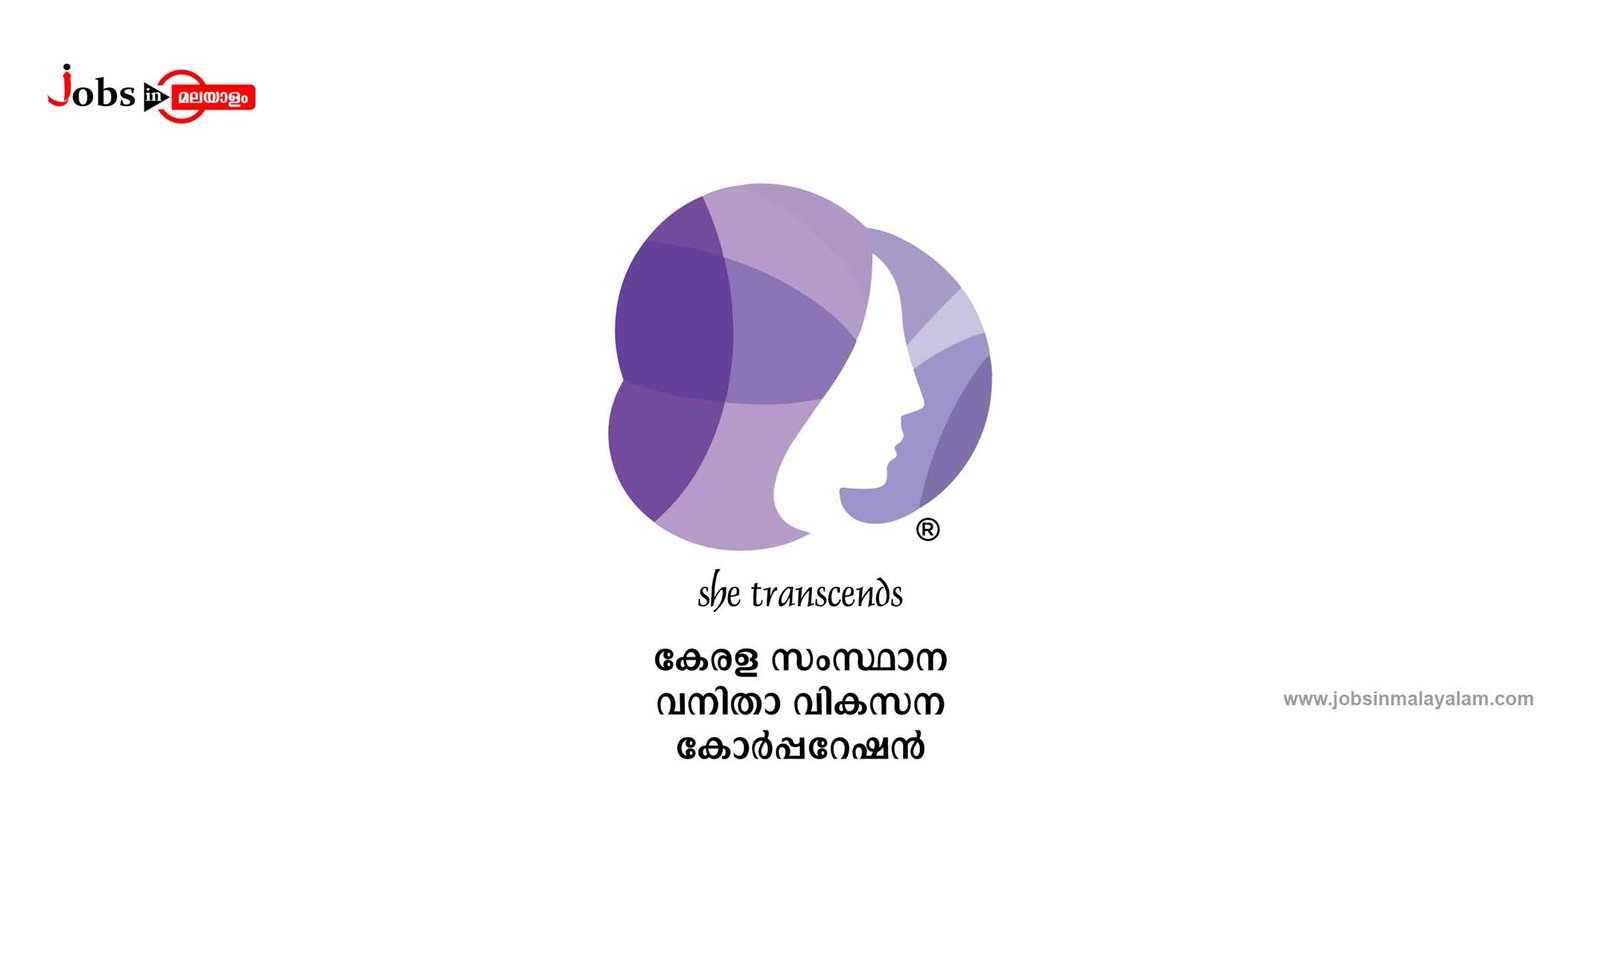 Kerala State Women’s Development Corporation Limited (KSWDC)